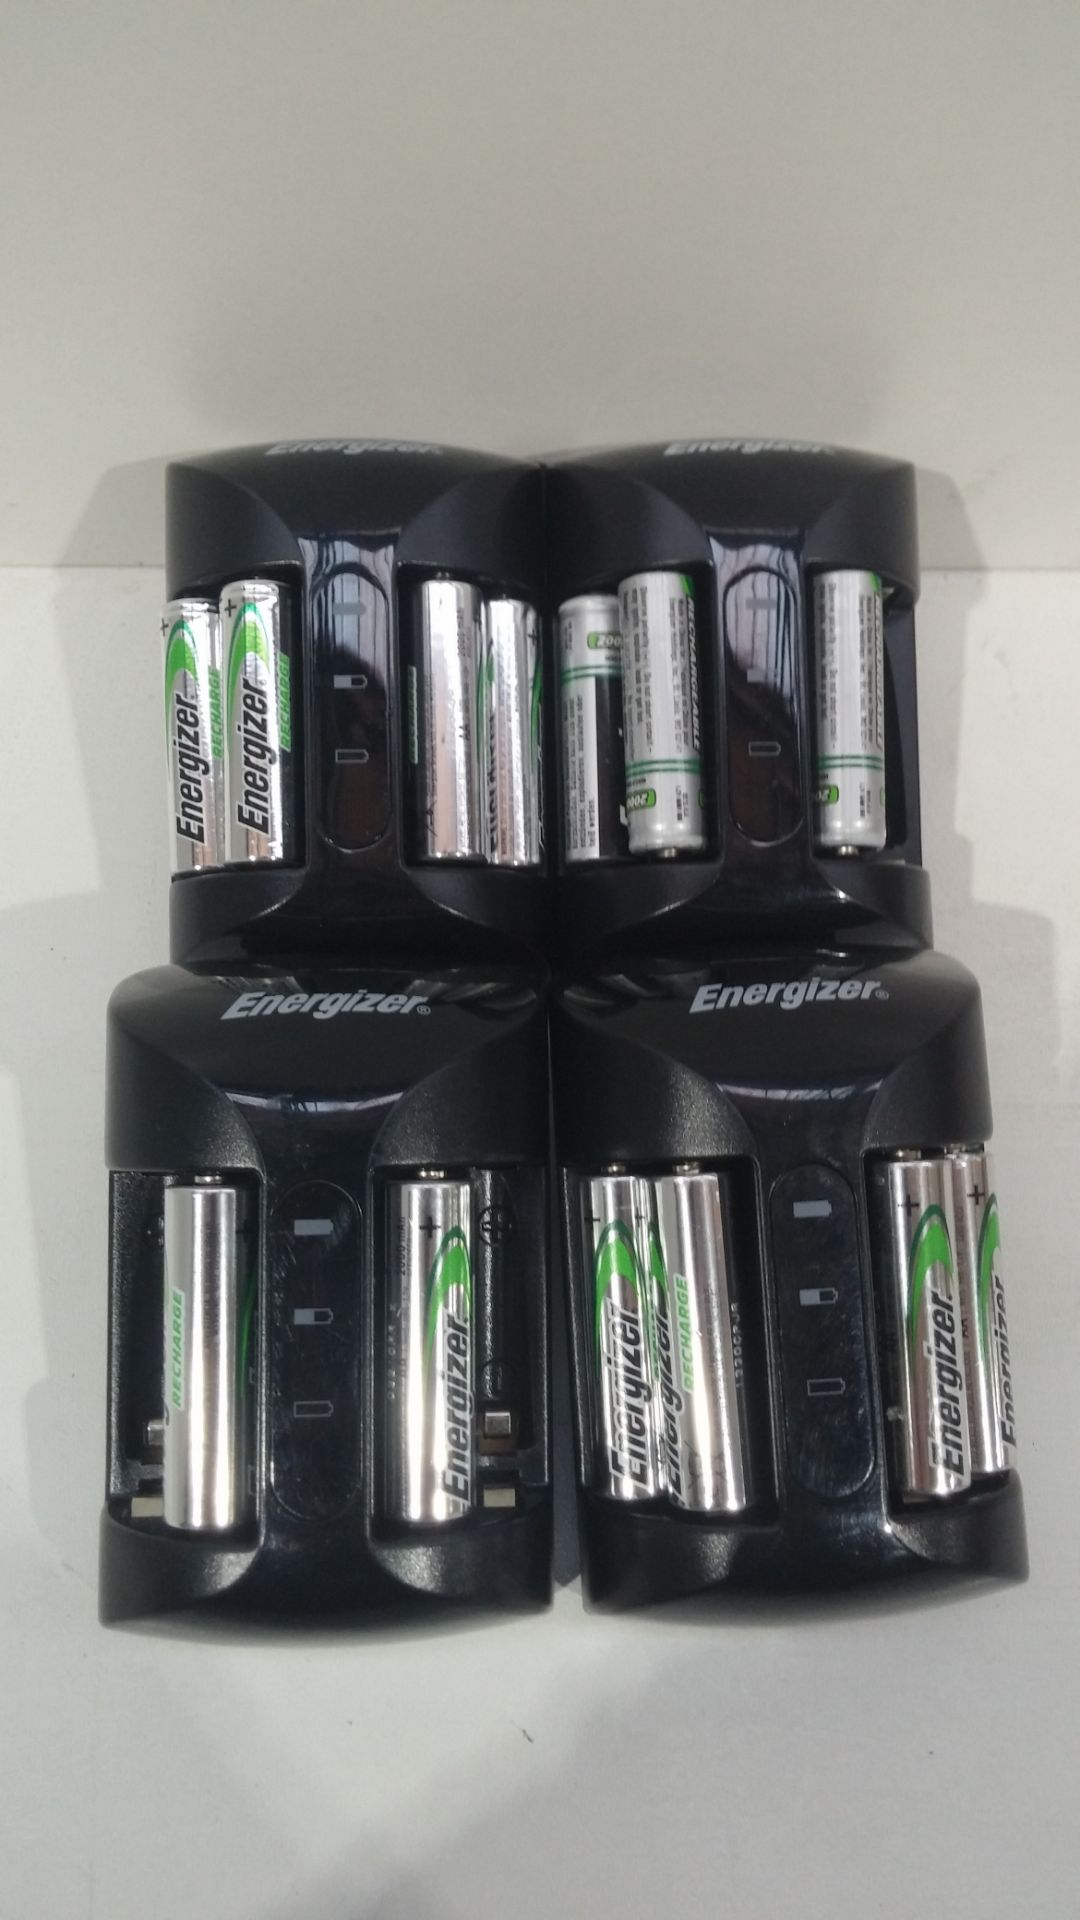 Unboxed Energizer NIMH Battert chargers